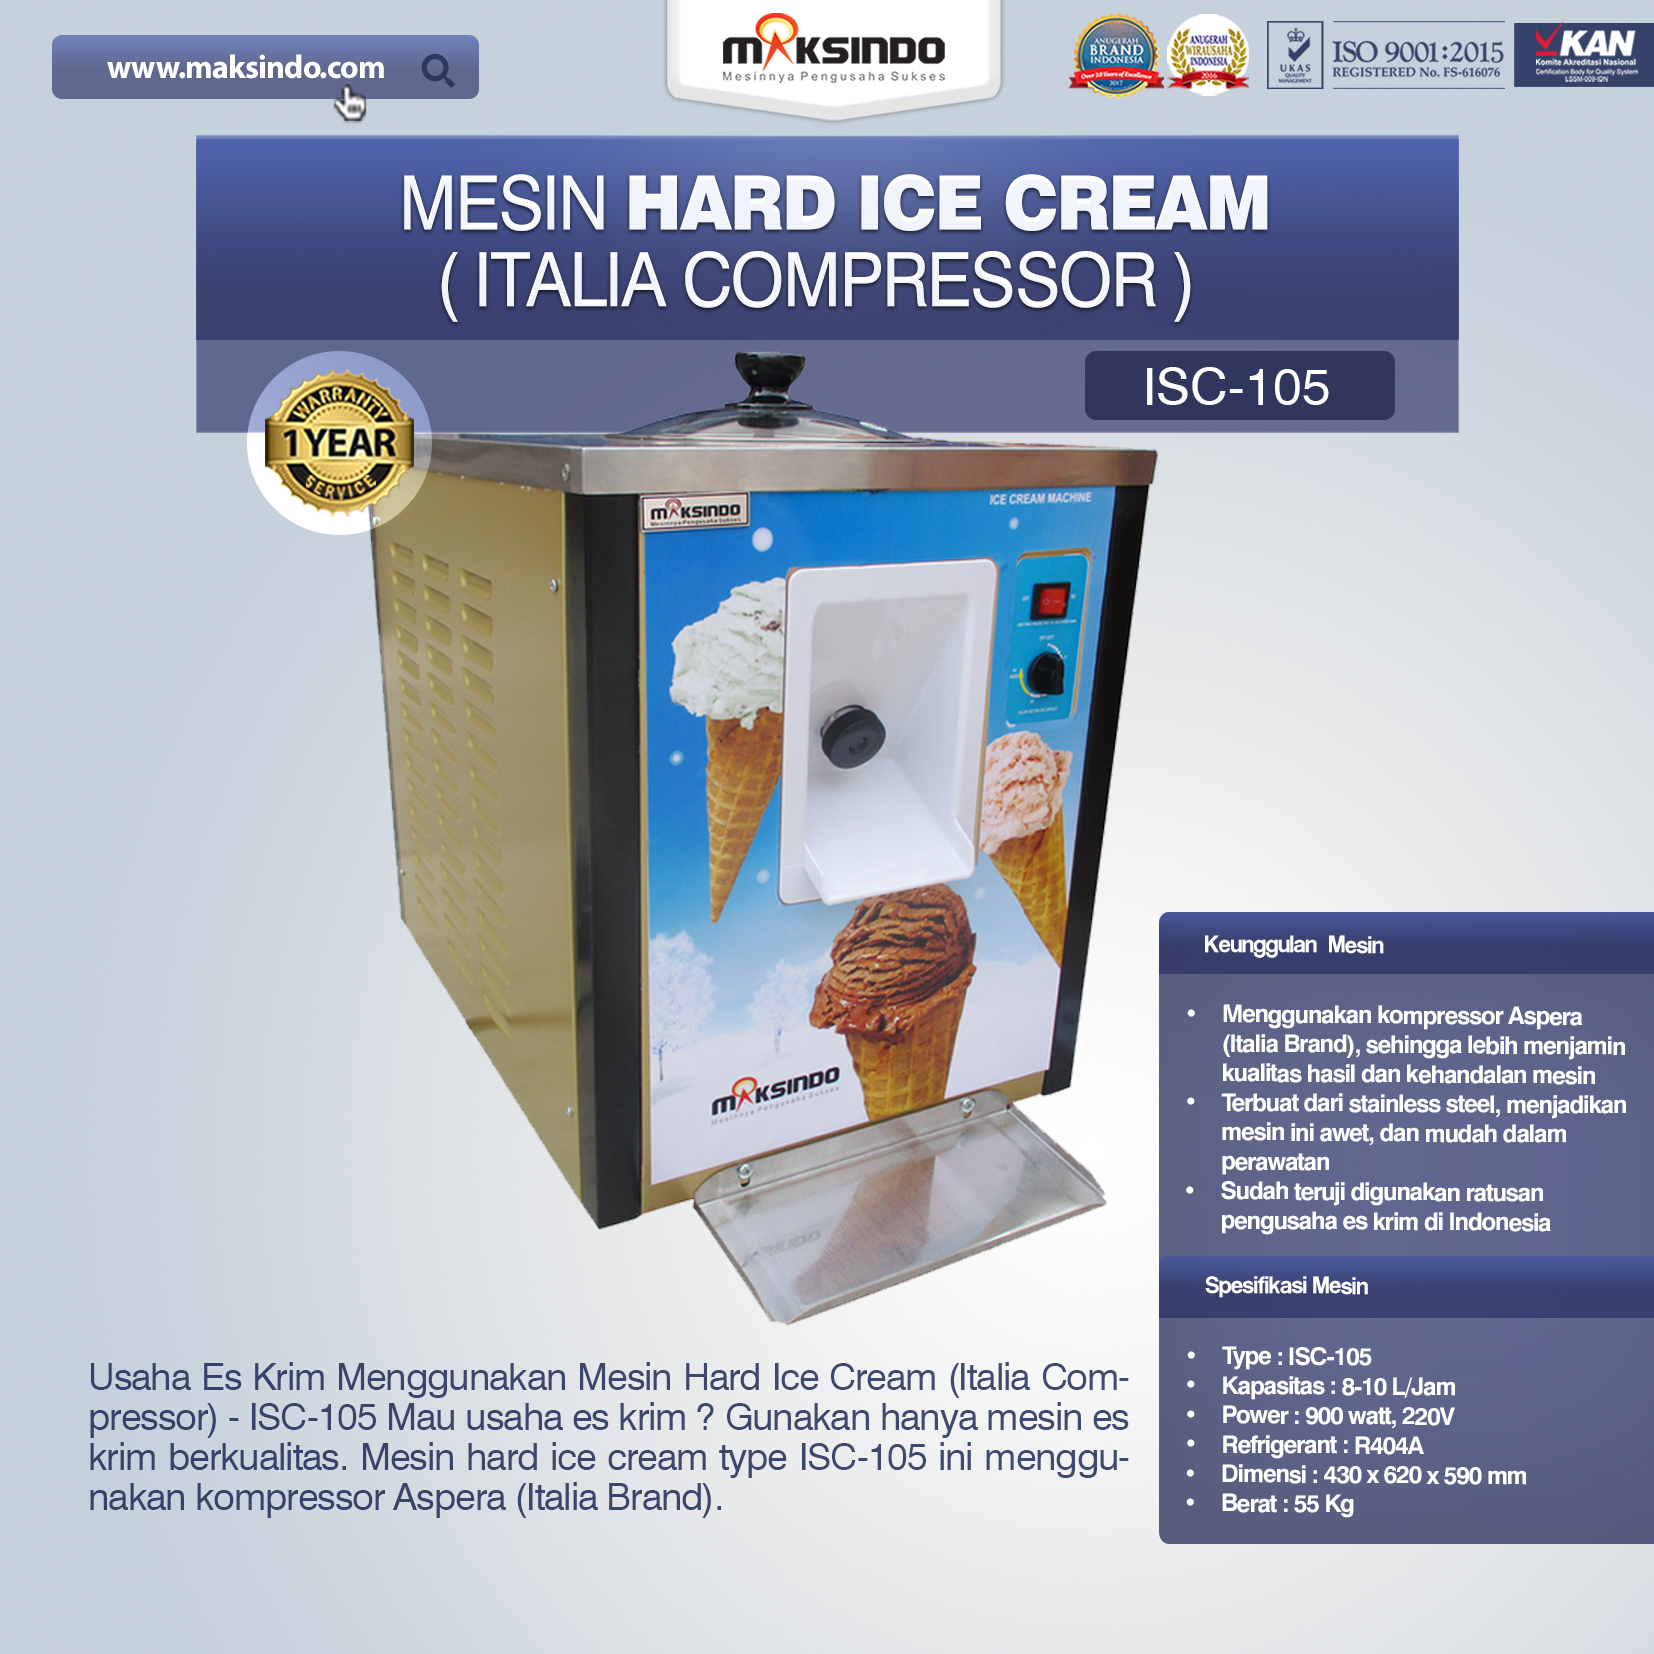 Jual Mesin Hard Ice Cream – ISC-105 di Tangerang